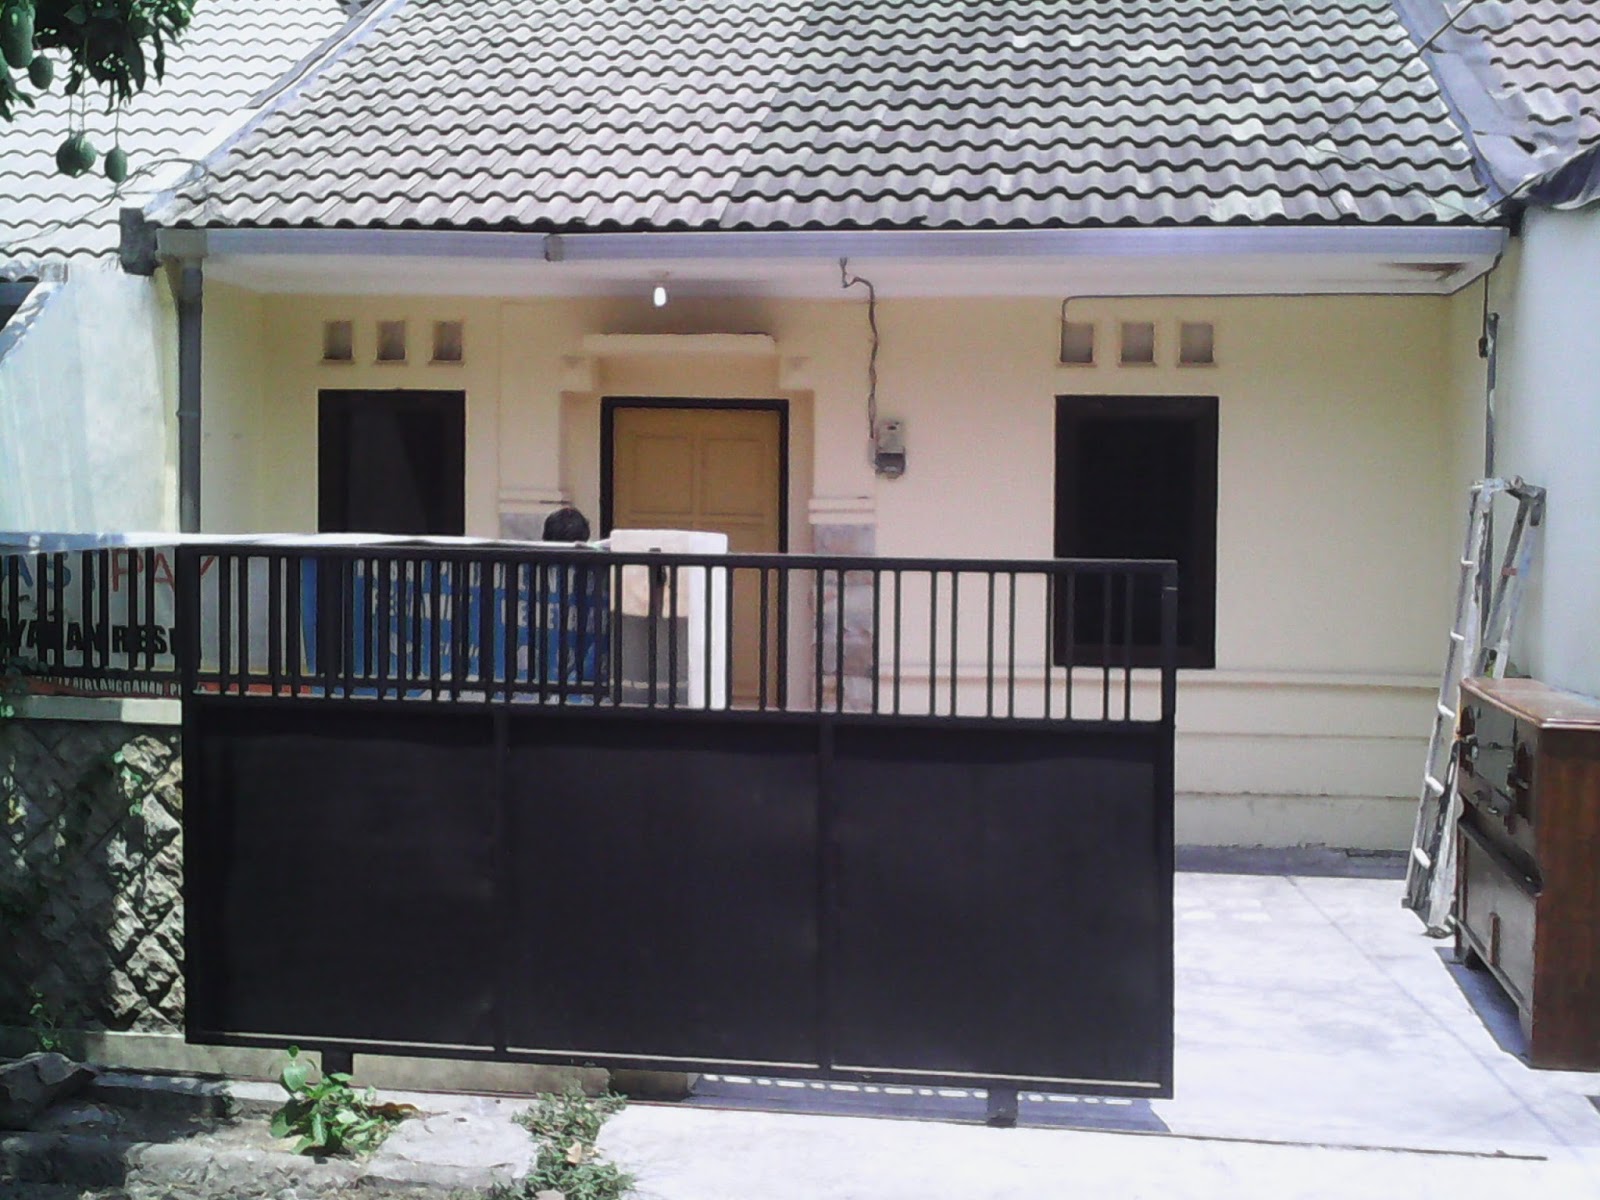 Rumah Murah Di Surabaya Harga Dibawah 100 Juta